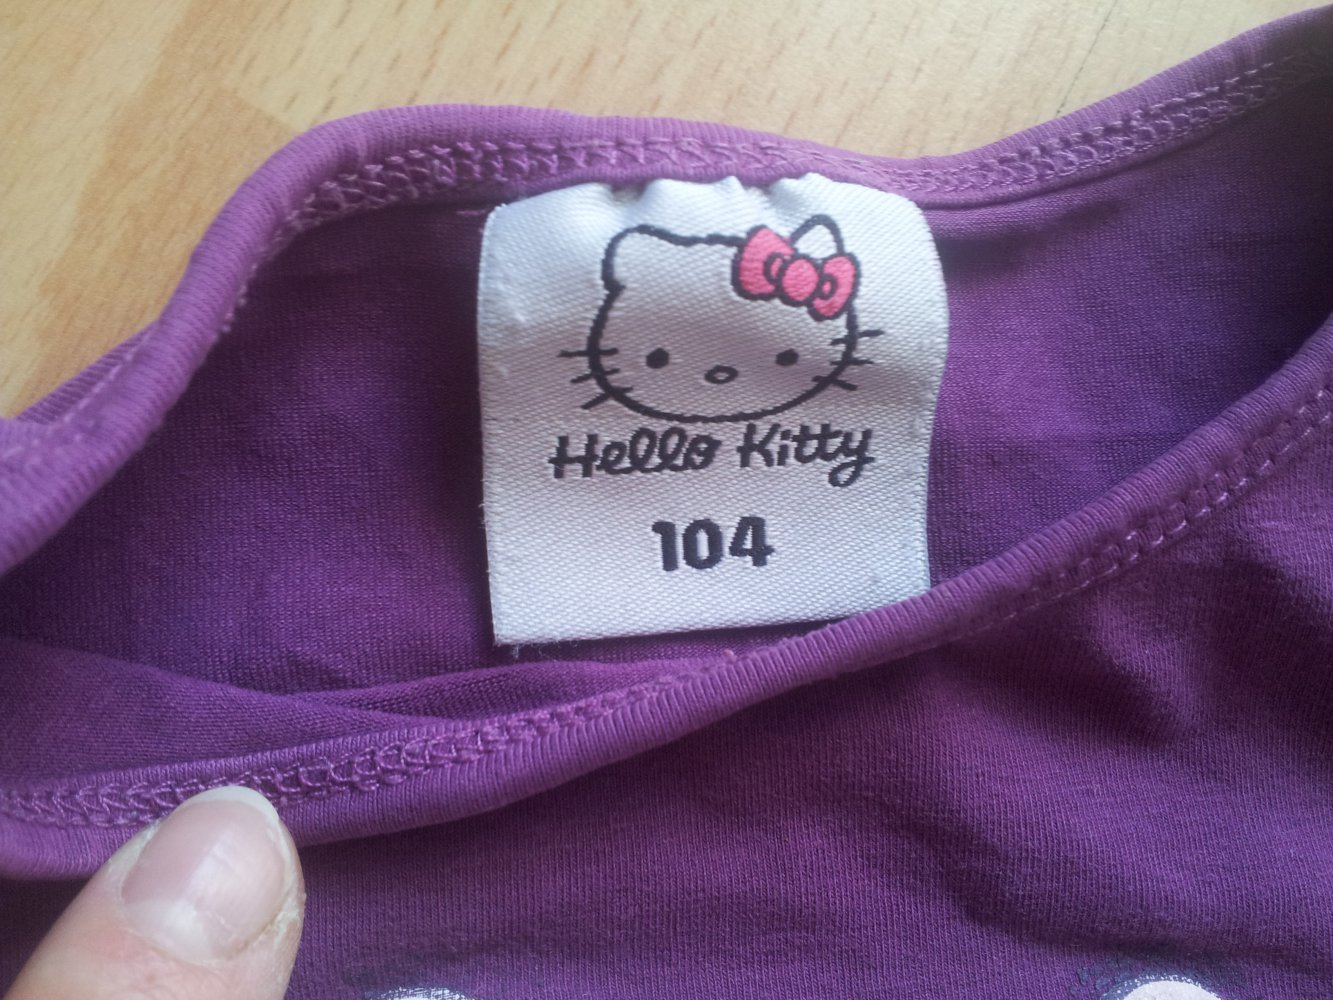  Pullover Hello Kitty lila weiß Gr. 104 